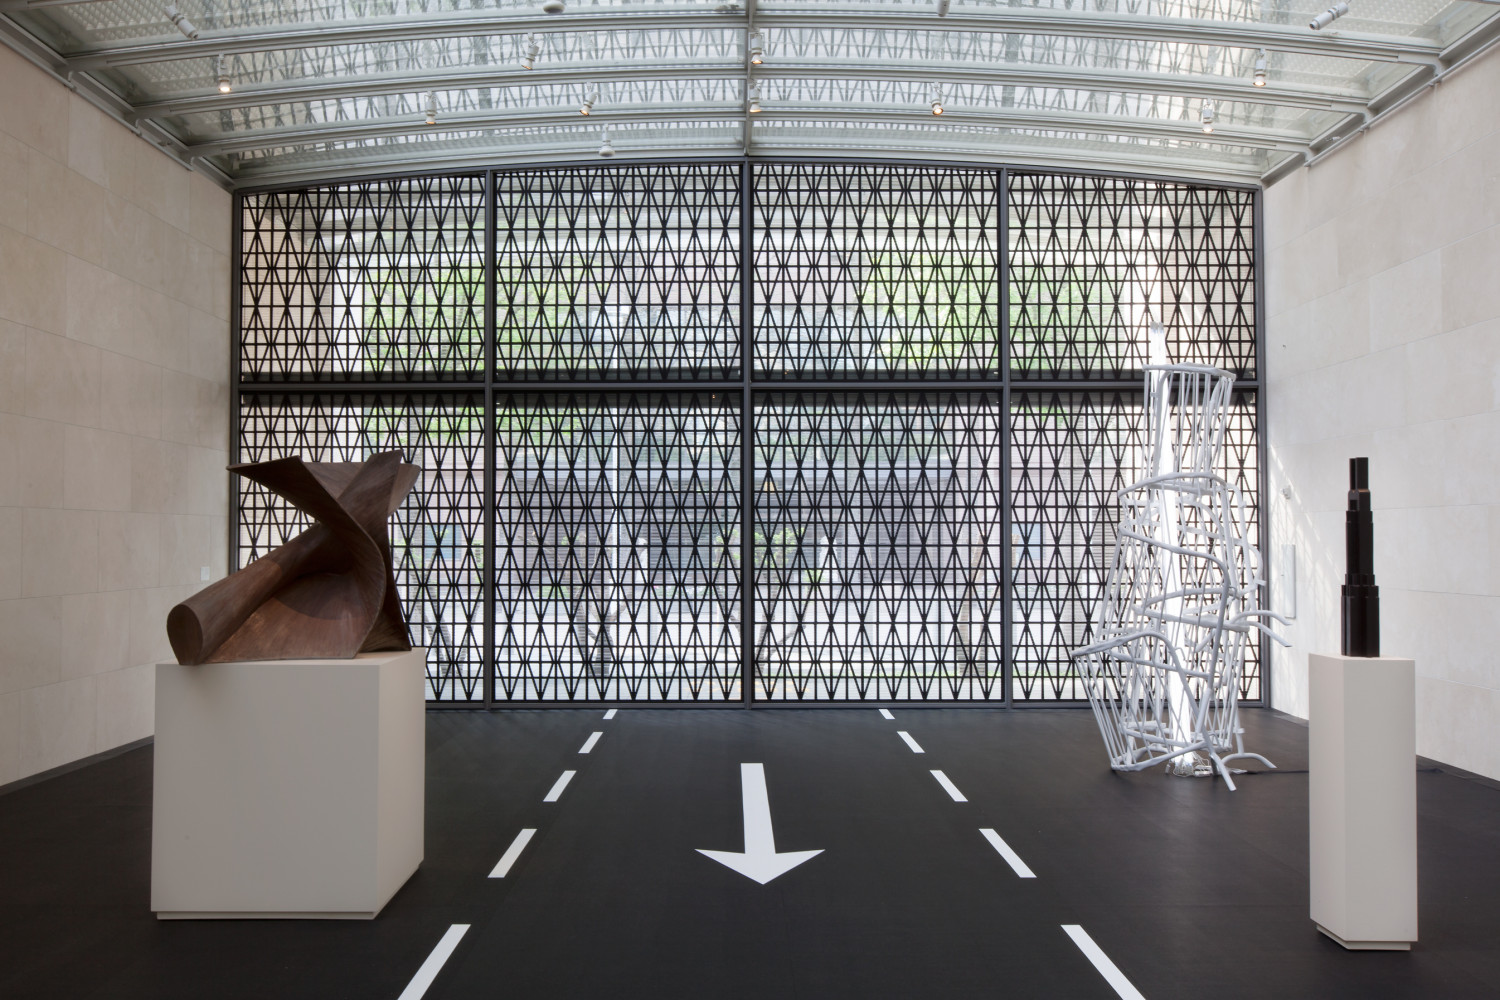 Bettina Pousttchi, ‘Drive Thru Museum, Nasher Sculpture Center, Dallas’, Installation view, 2014